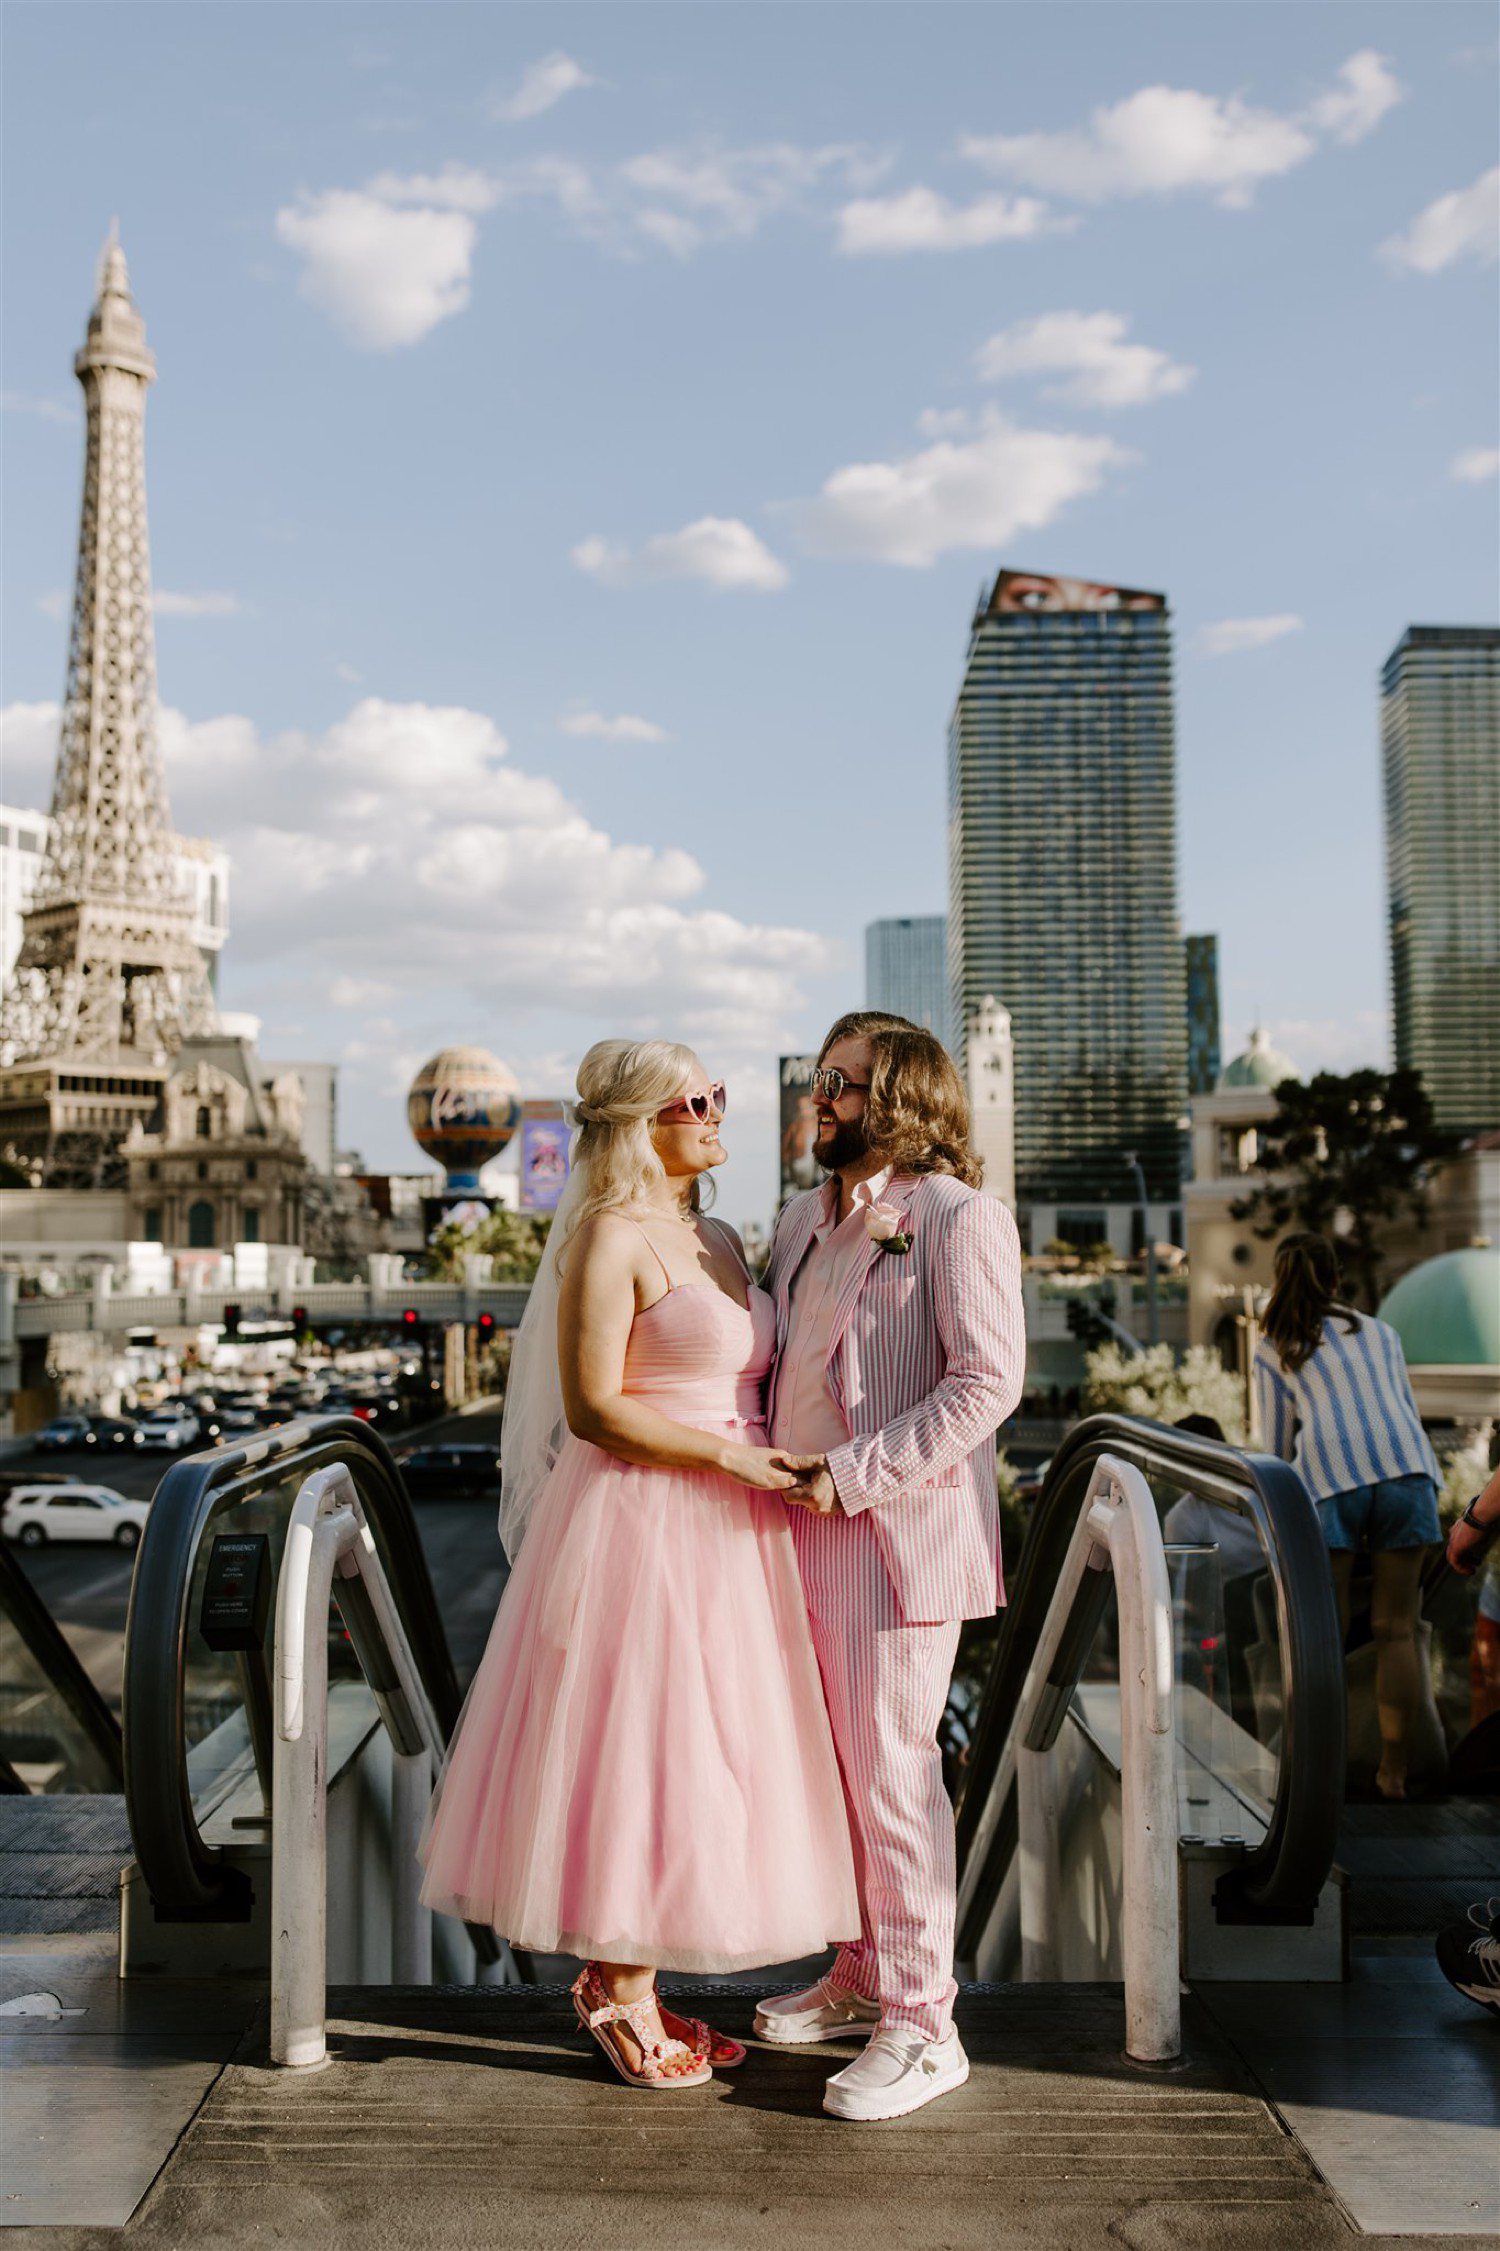 Las Vegas Wedding photos on the strip with couple in pink wedding attire.